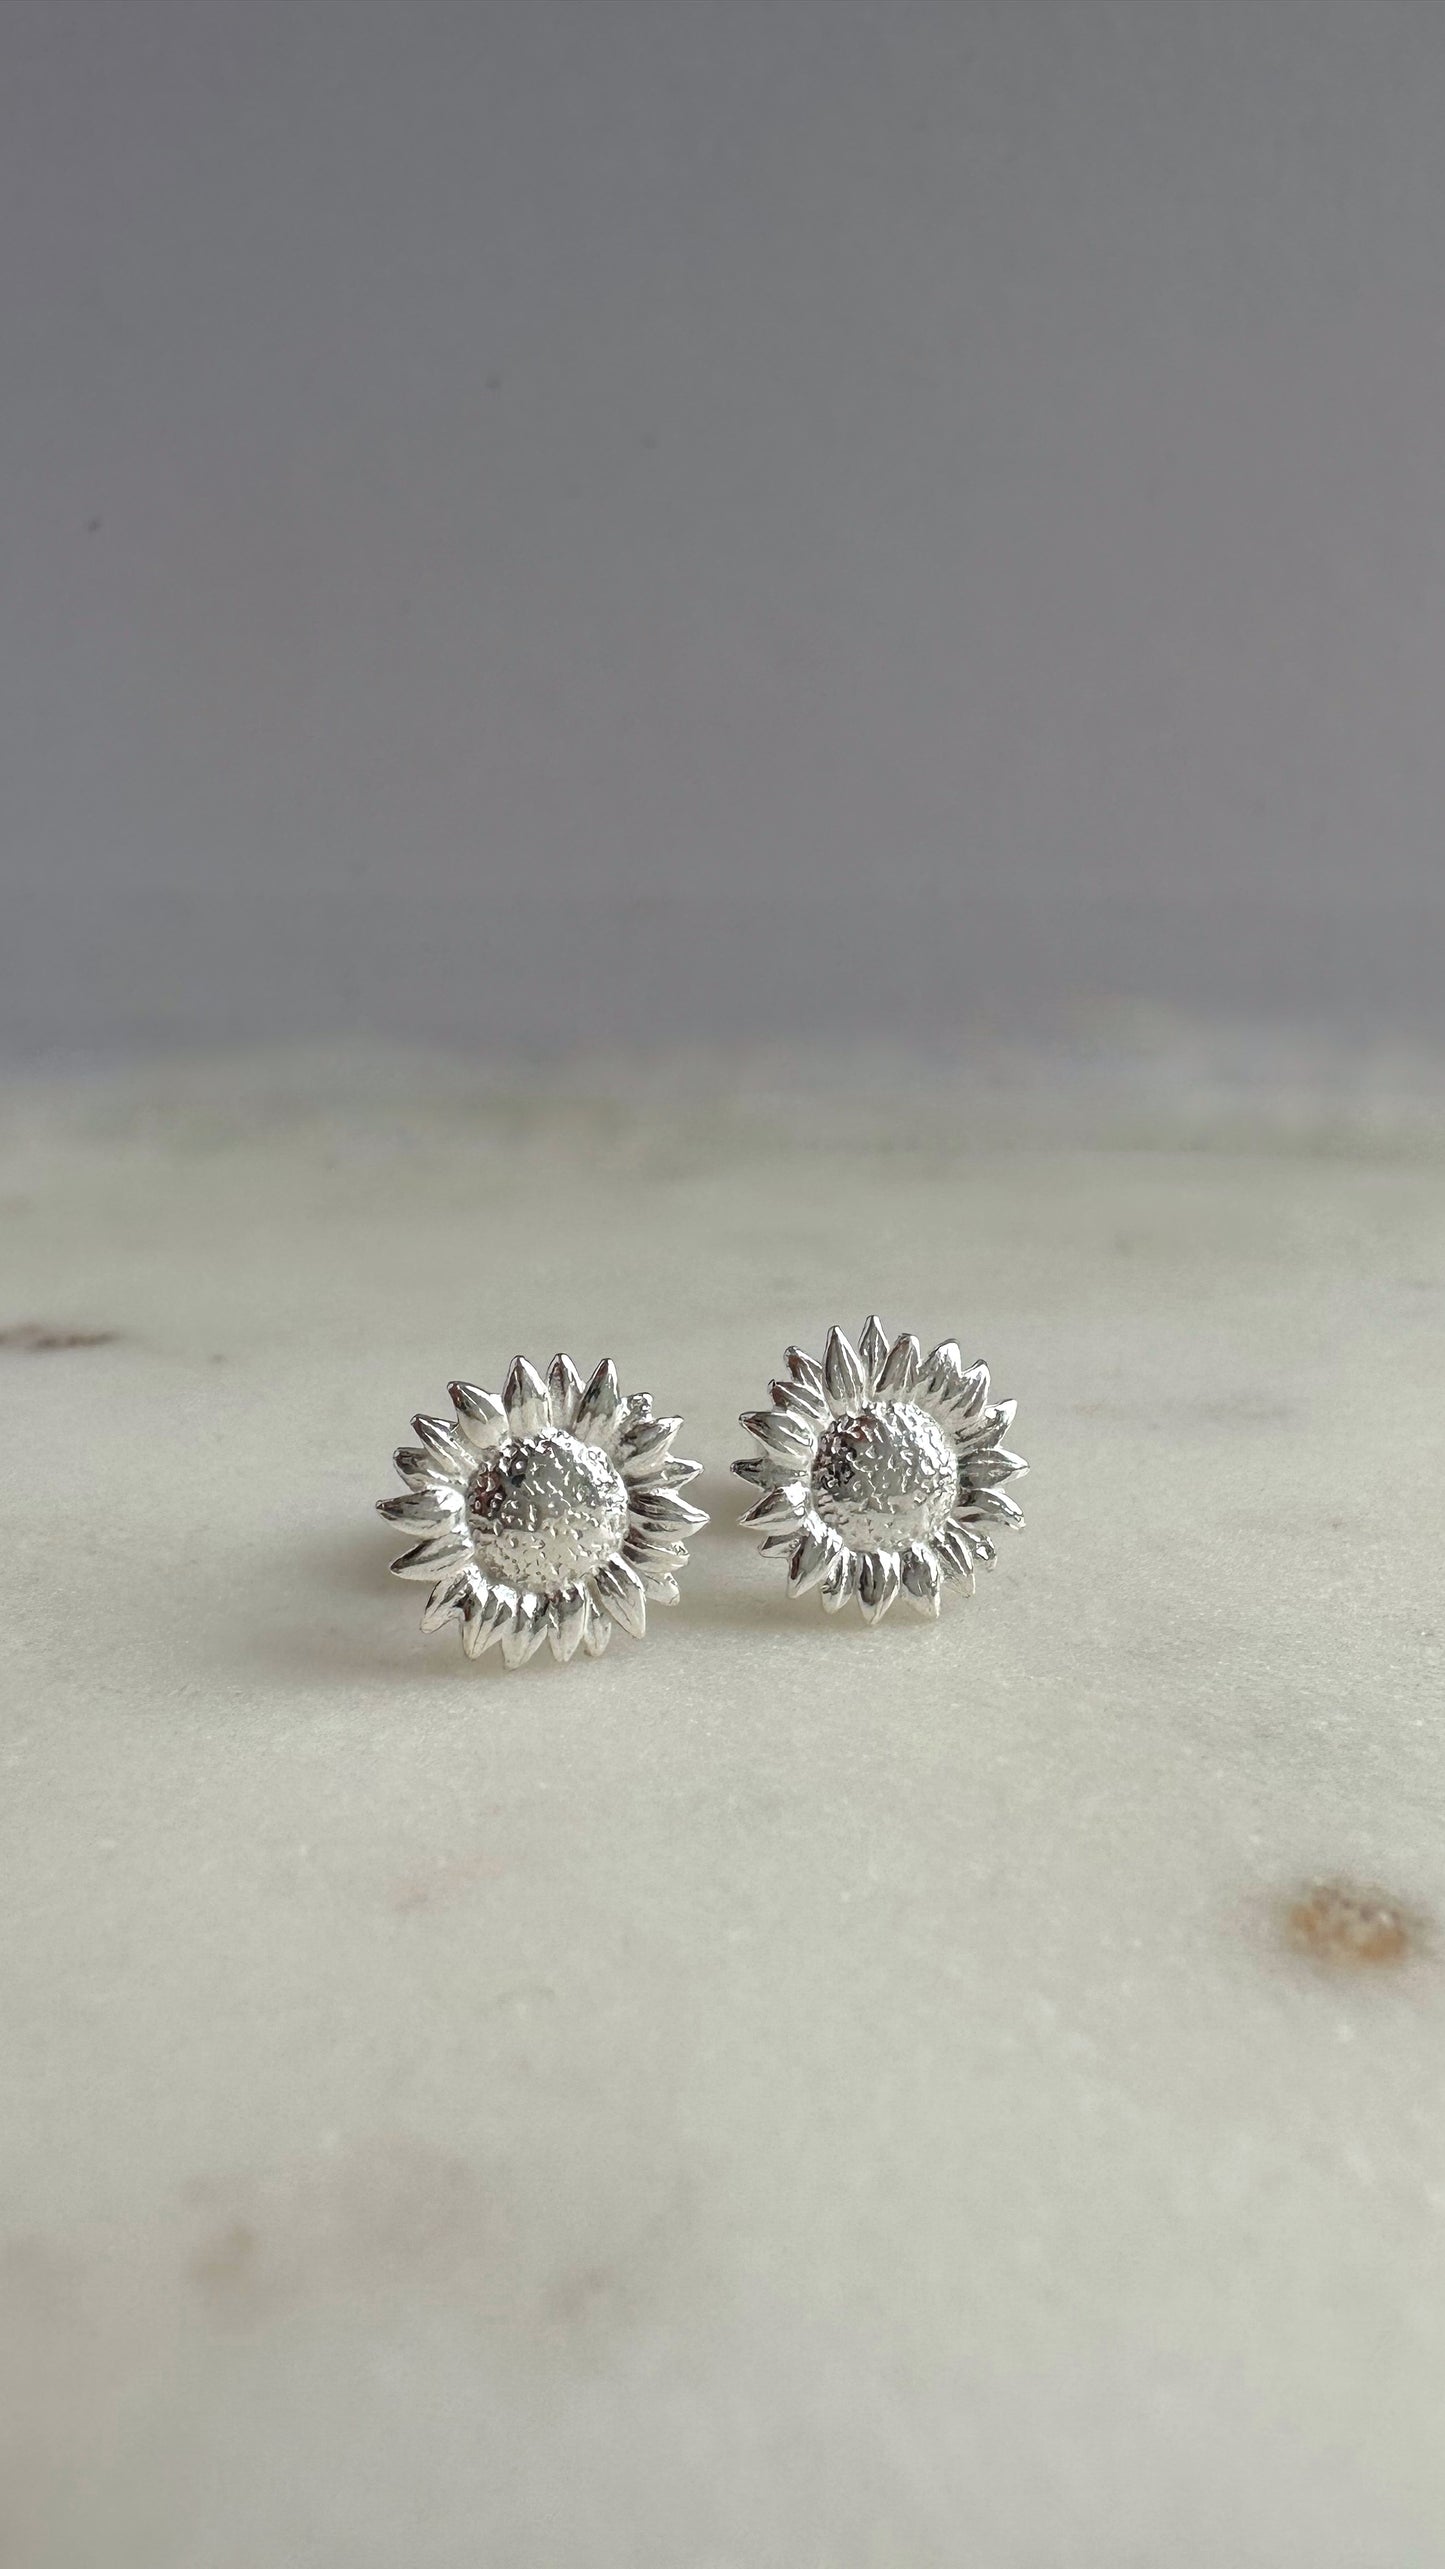 Sunflower studs earrings